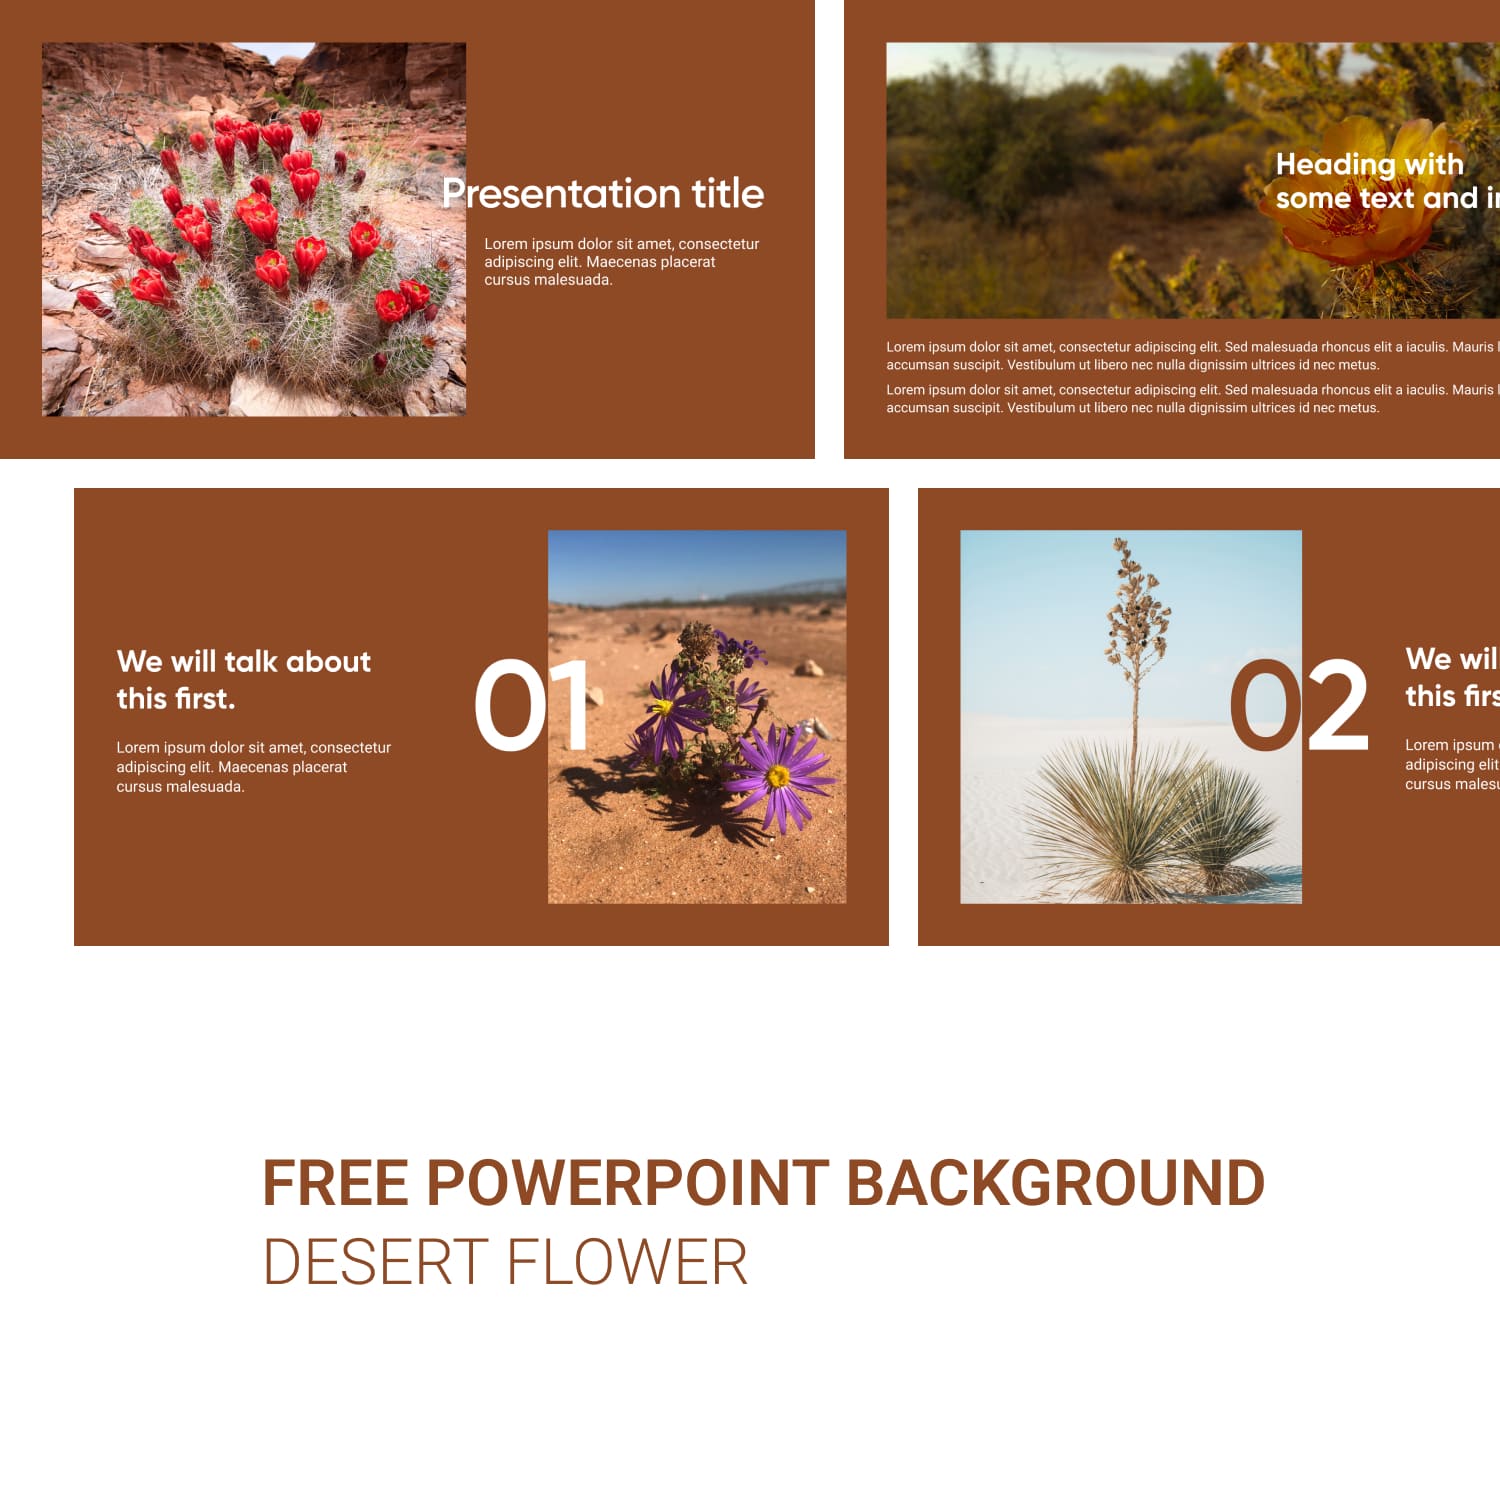 Preview Free Powerpoint Background Desert Flower 1500 1.